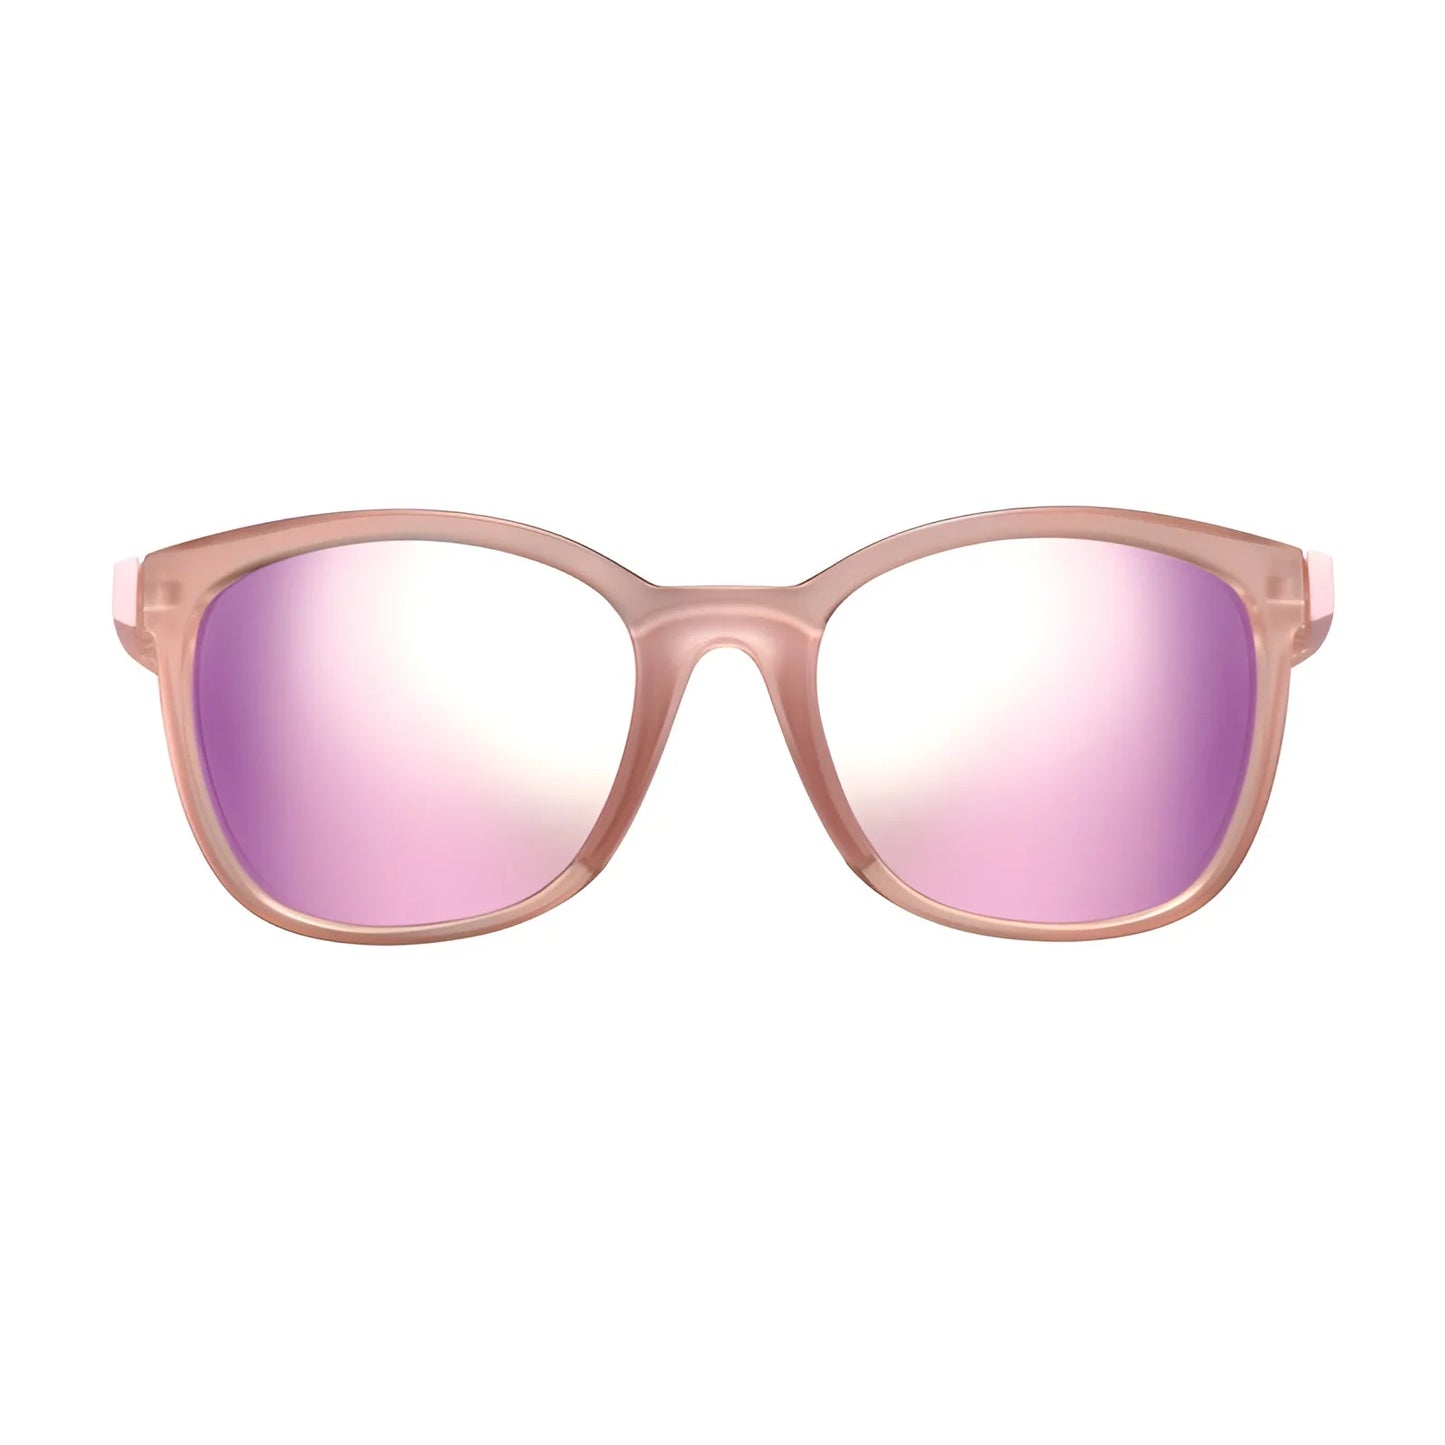 Julbo Spark Sunglasses | Size 54